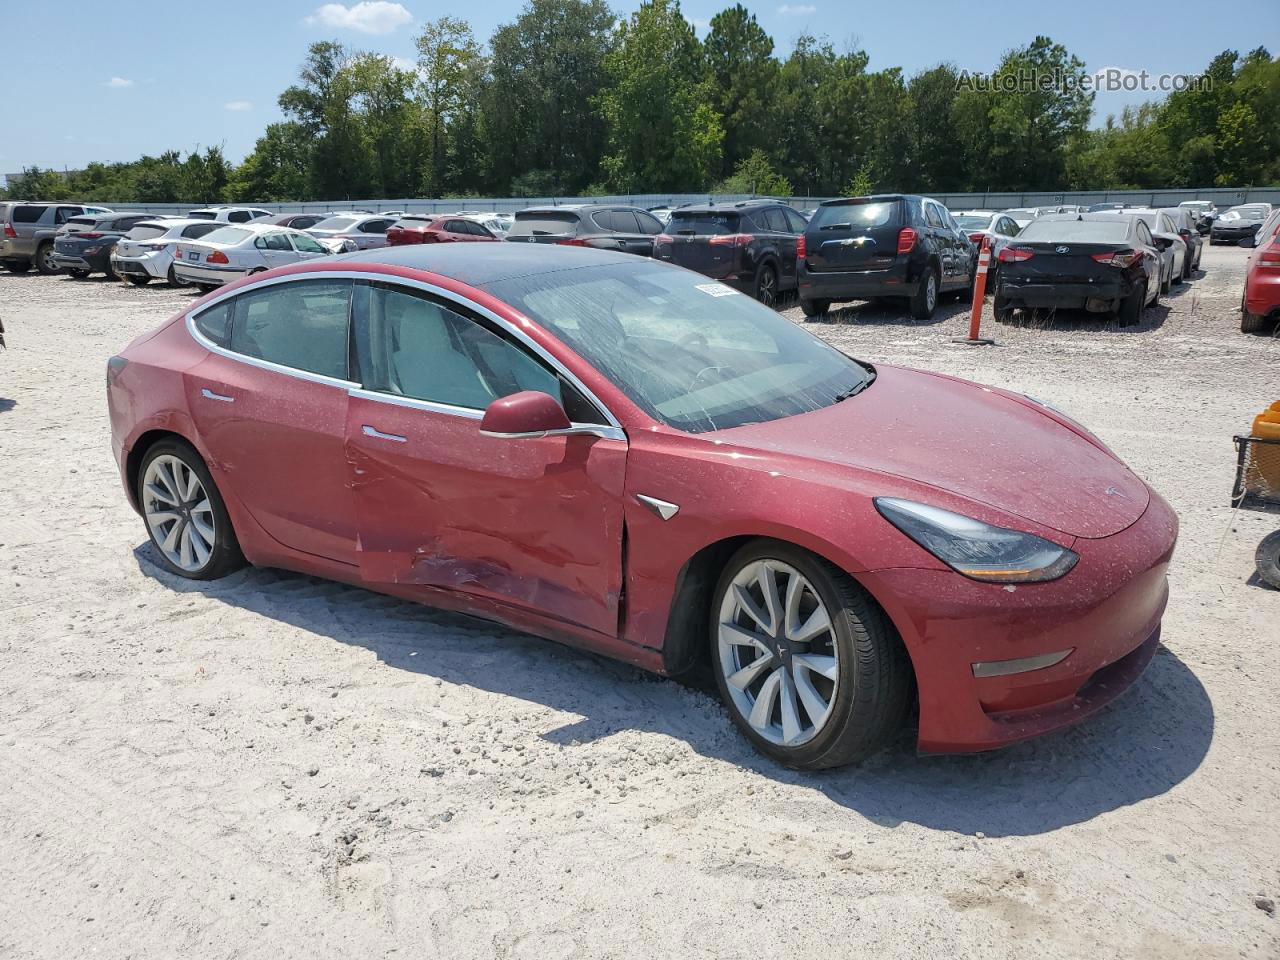 2020 Tesla Model 3  Red vin: 5YJ3E1EB8LF537185